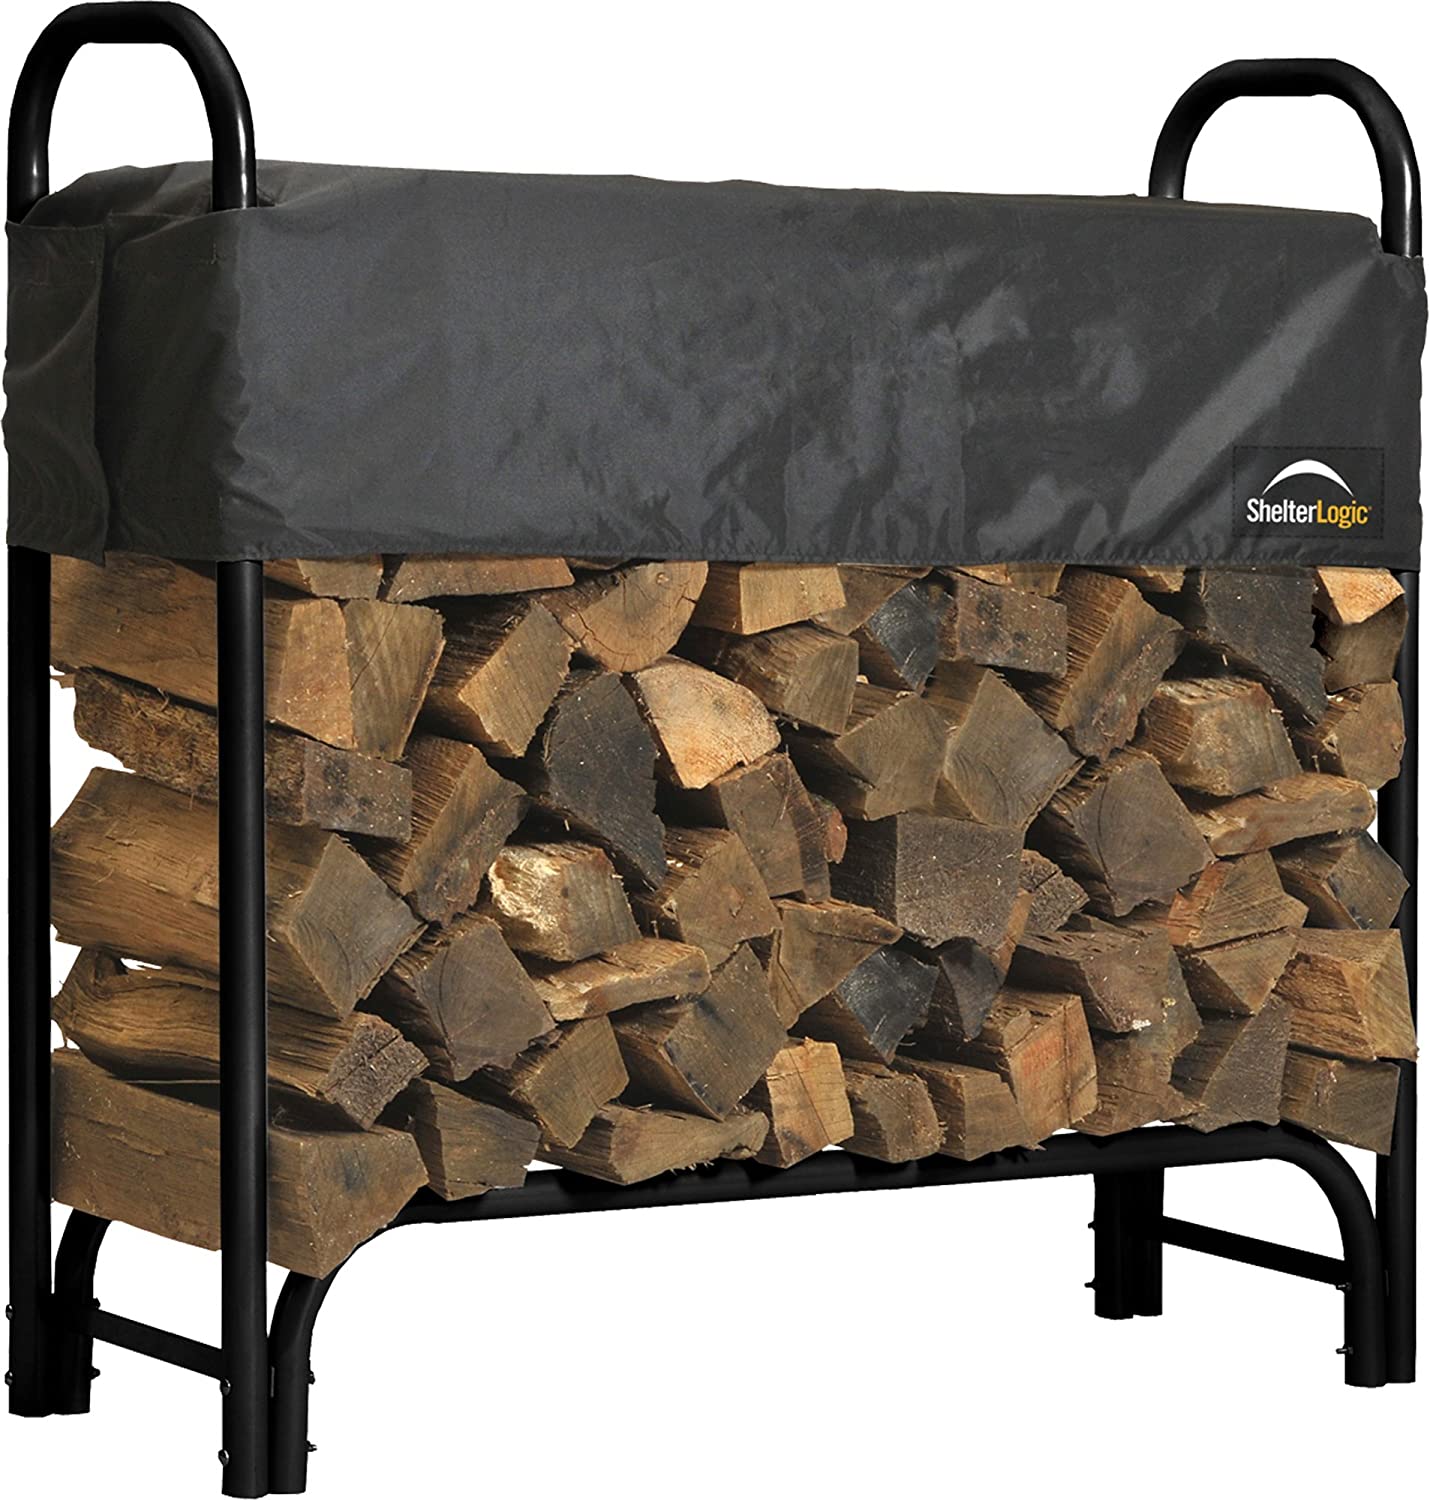 ShelterLogic Stainless Steel Easy Assemble Firewood Rack, 4-Foot